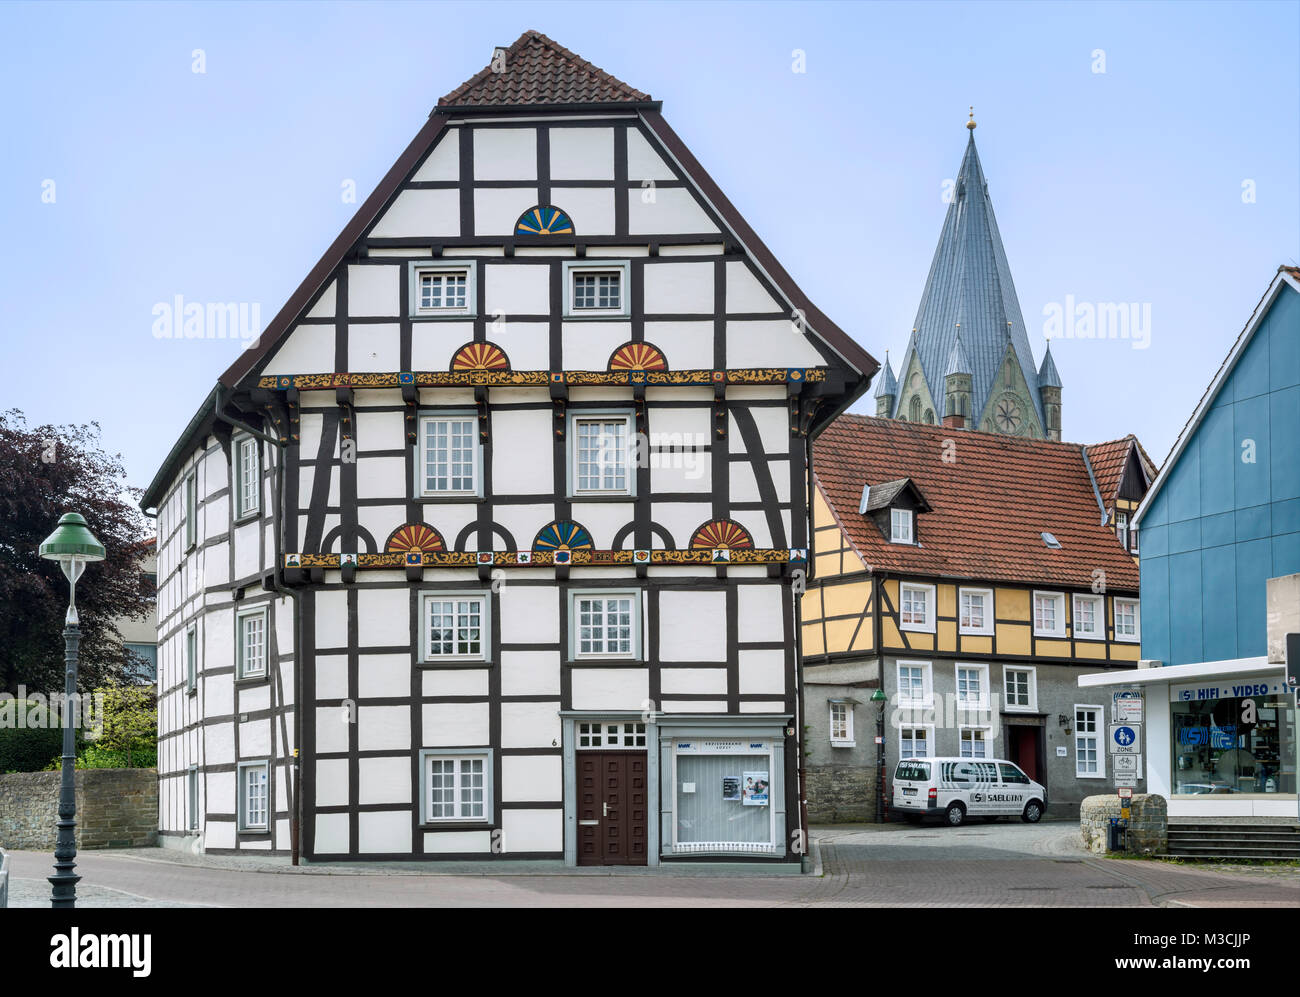 Half-timbered house, 16th century, at Wiesenstrasse, tower of St Patroclus Church, in Soest, Ostwestfalen Region, North Rhine-Westphalia, Germany Stock Photo